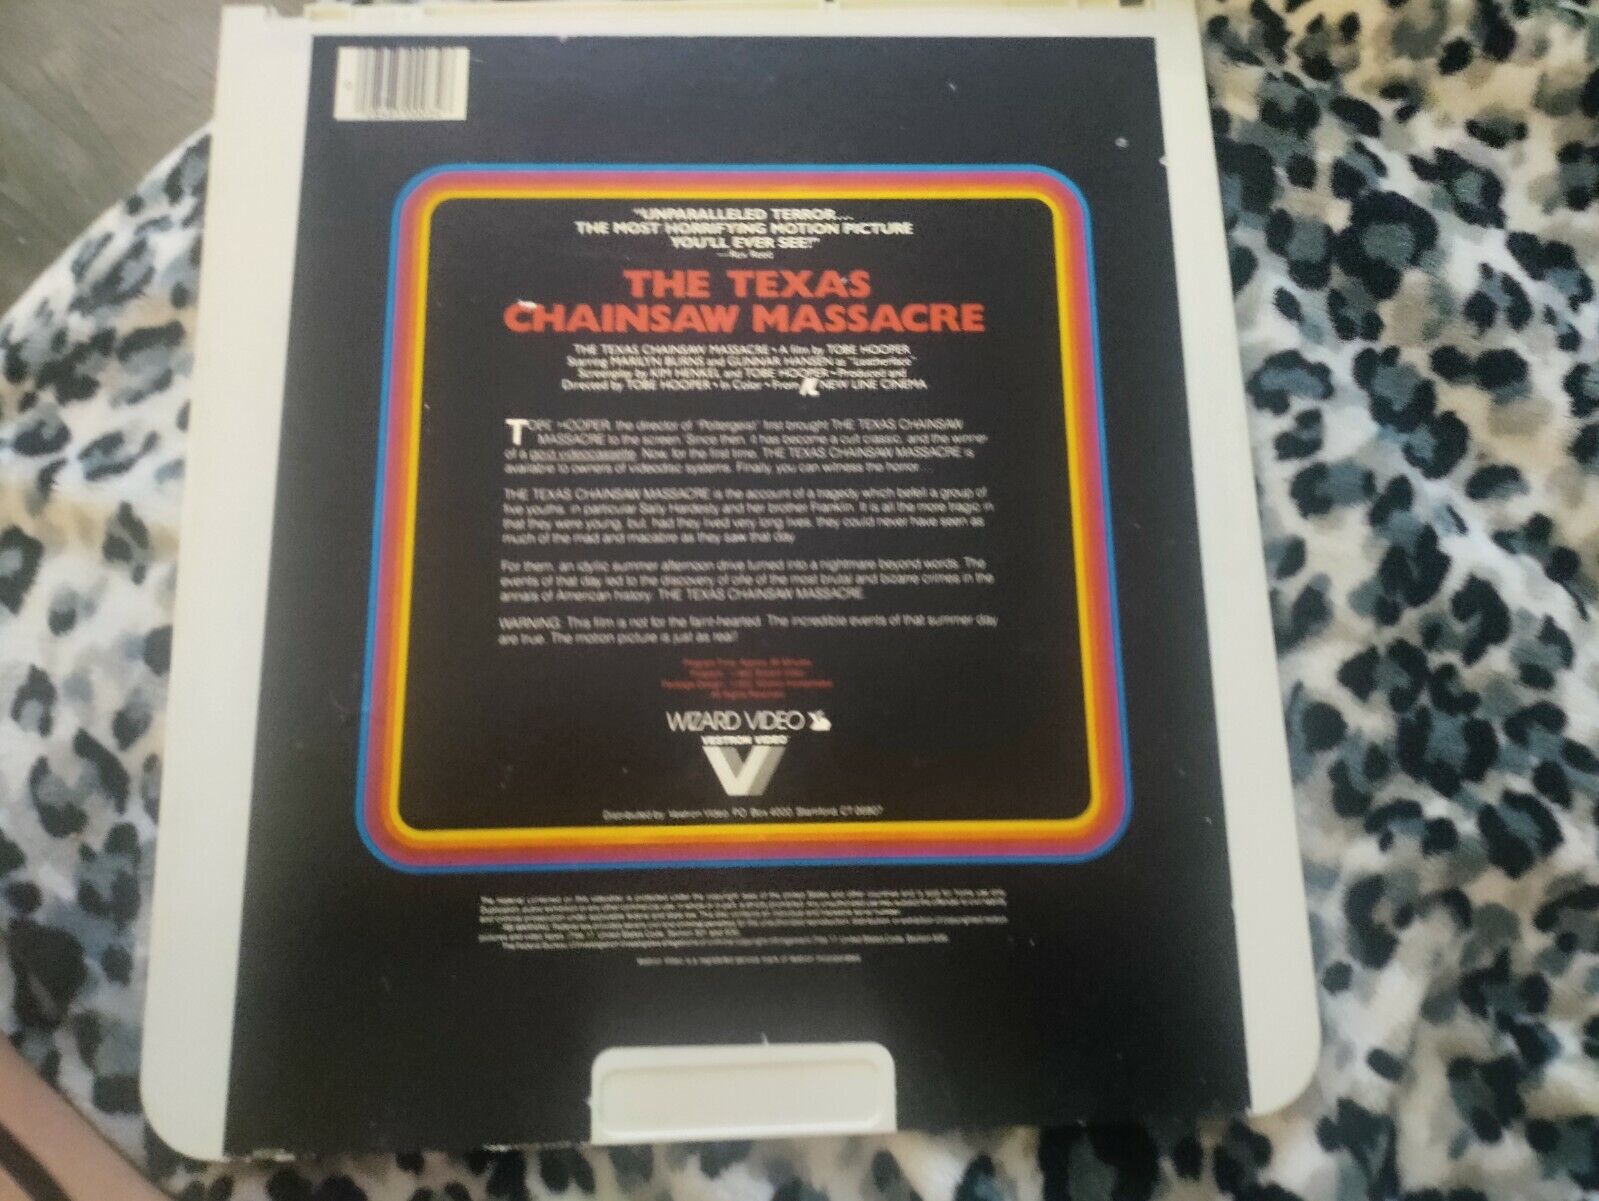 New Old Stock Texas Chainsaw Massacre Wizard Vestron Video Laserdisc Unopened 